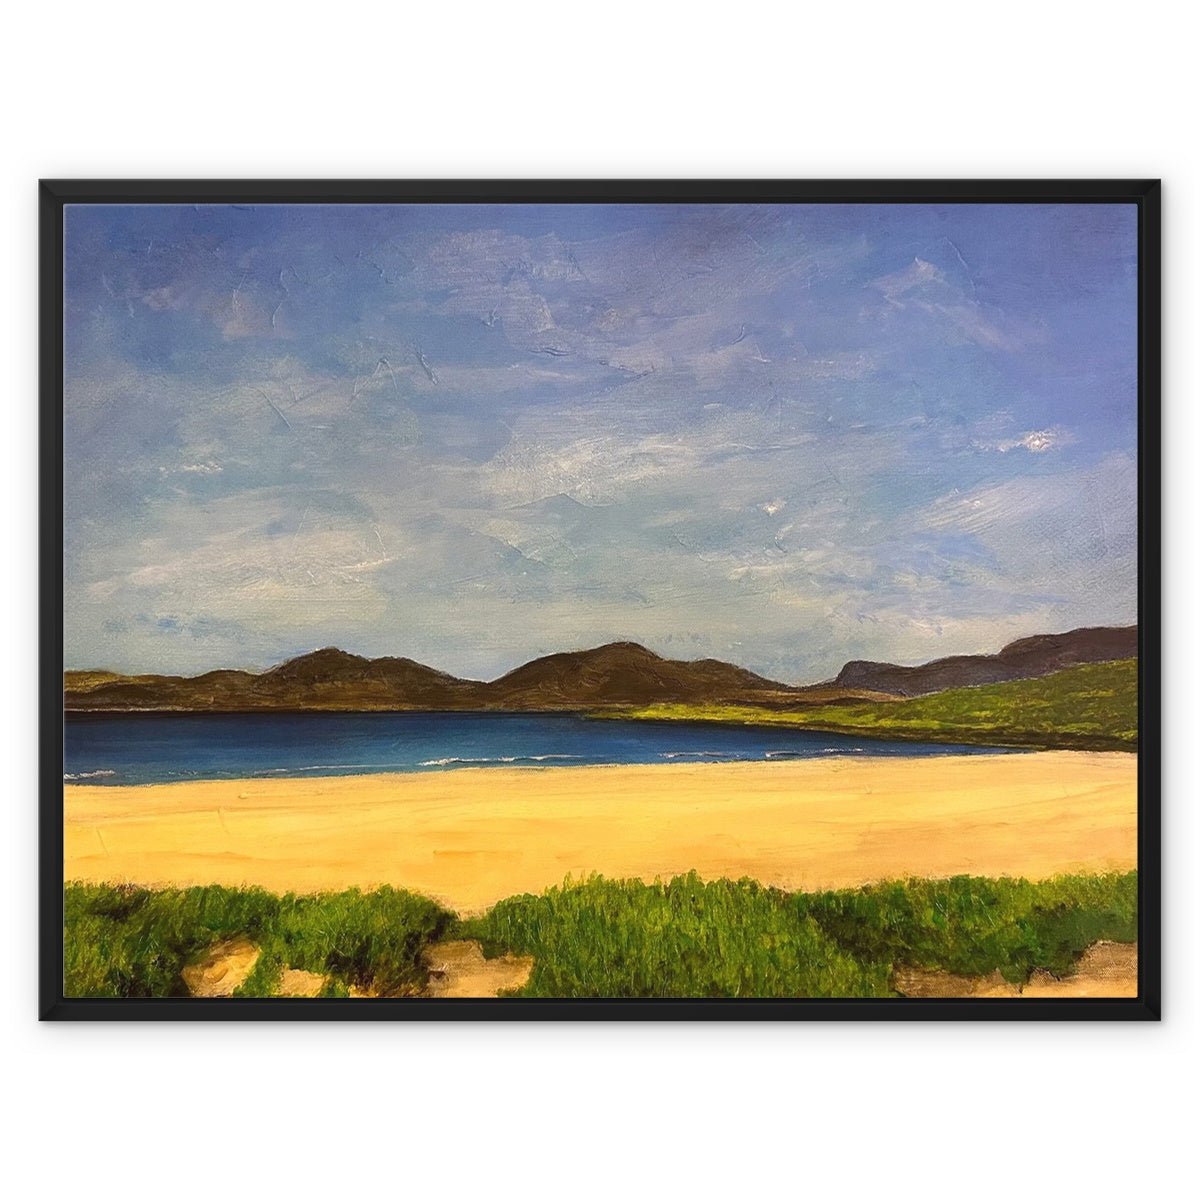 Luskentyre Beach Harris Painting | Framed Canvas From Scotland-Floating Framed Canvas Prints-Hebridean Islands Art Gallery-32"x24"-Black Frame-Paintings, Prints, Homeware, Art Gifts From Scotland By Scottish Artist Kevin Hunter